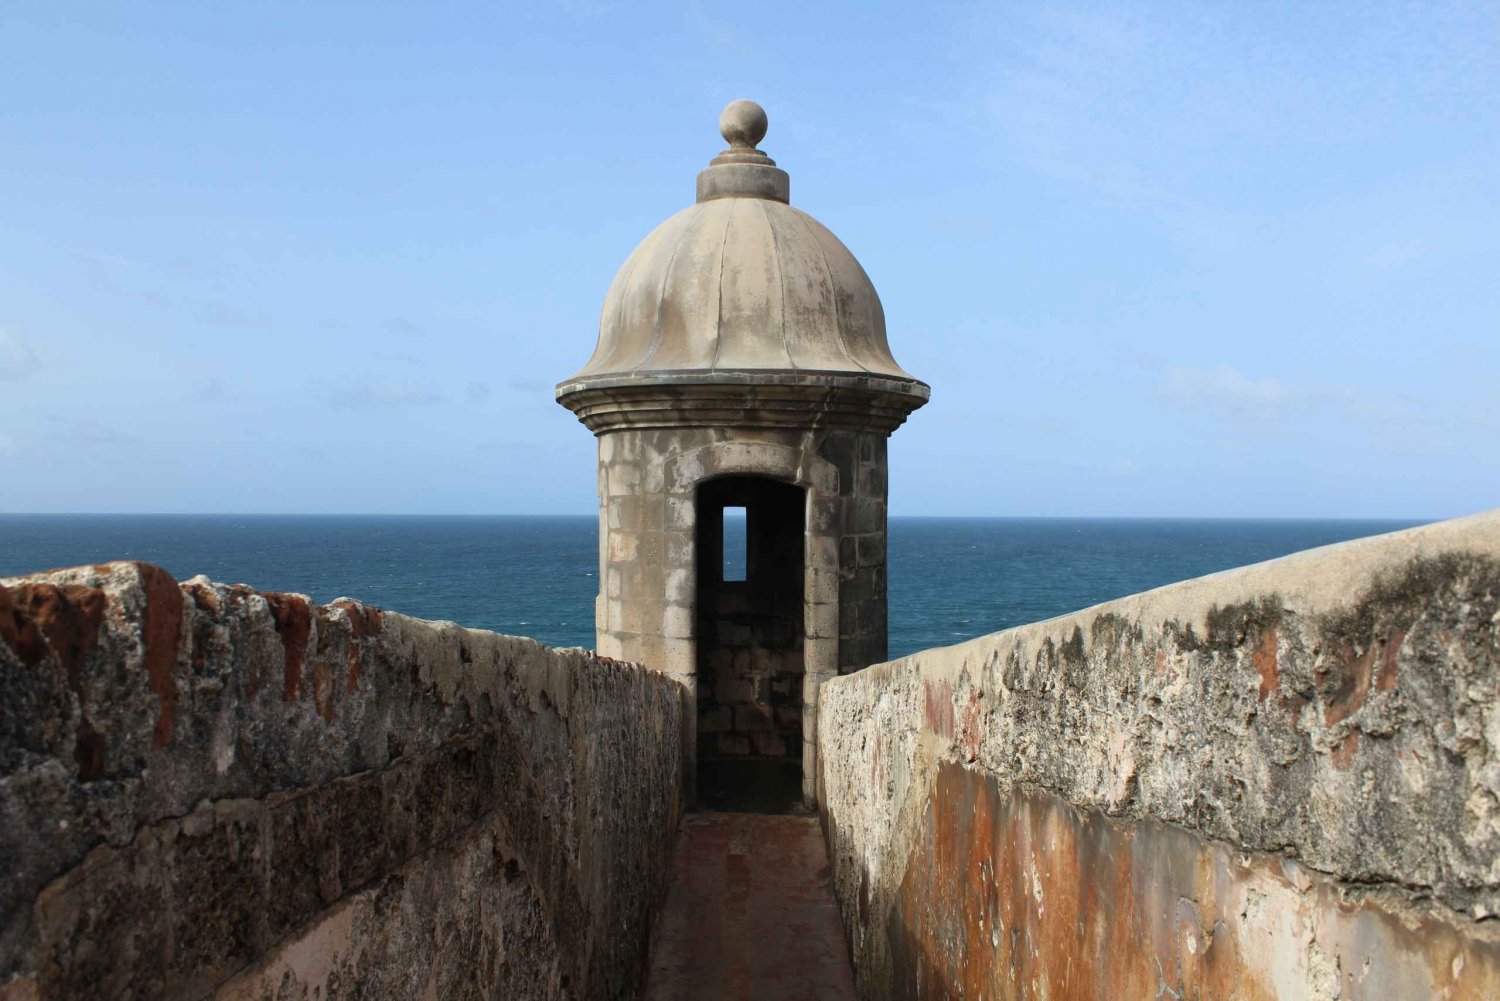 San Juan: Vanhan San Juanin kävelykierros